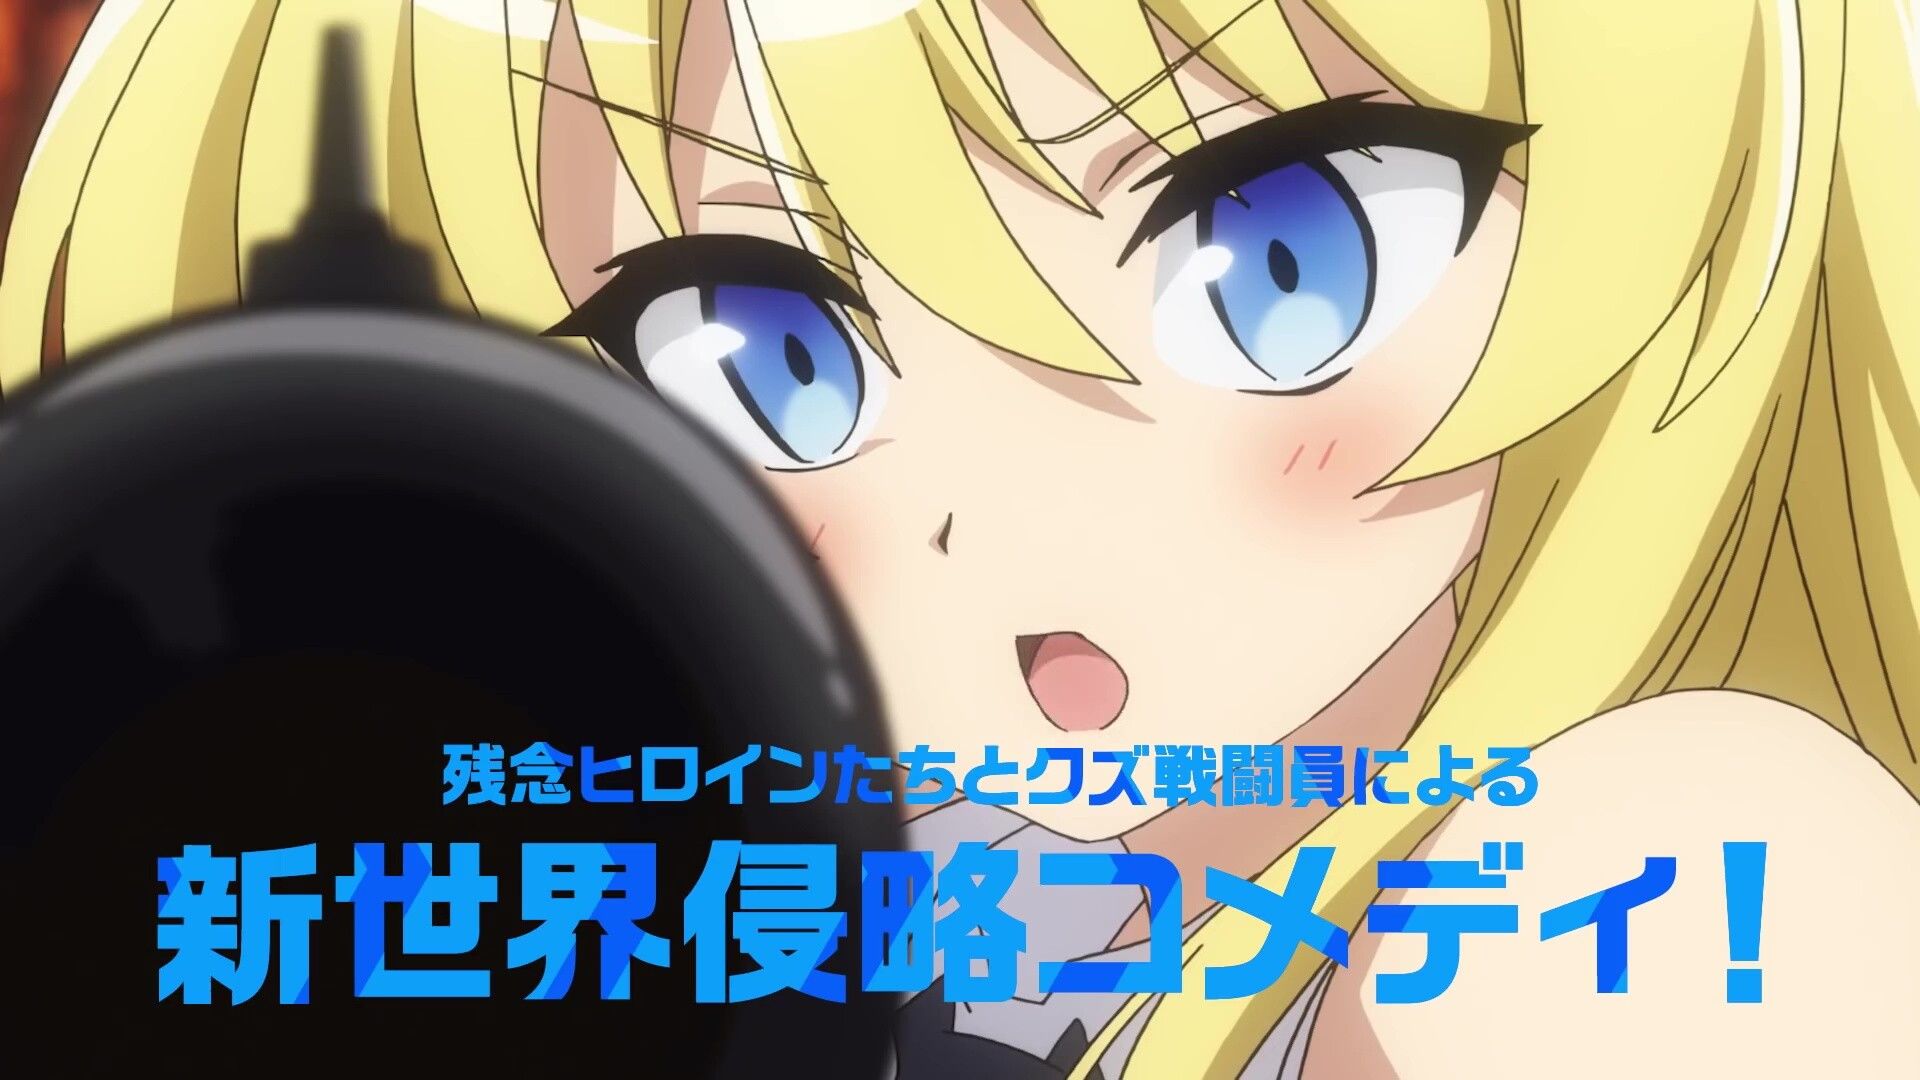 Anime "Combatant, I'm dispatched! Erotic costume girls and neta! April broadcasting starts 28